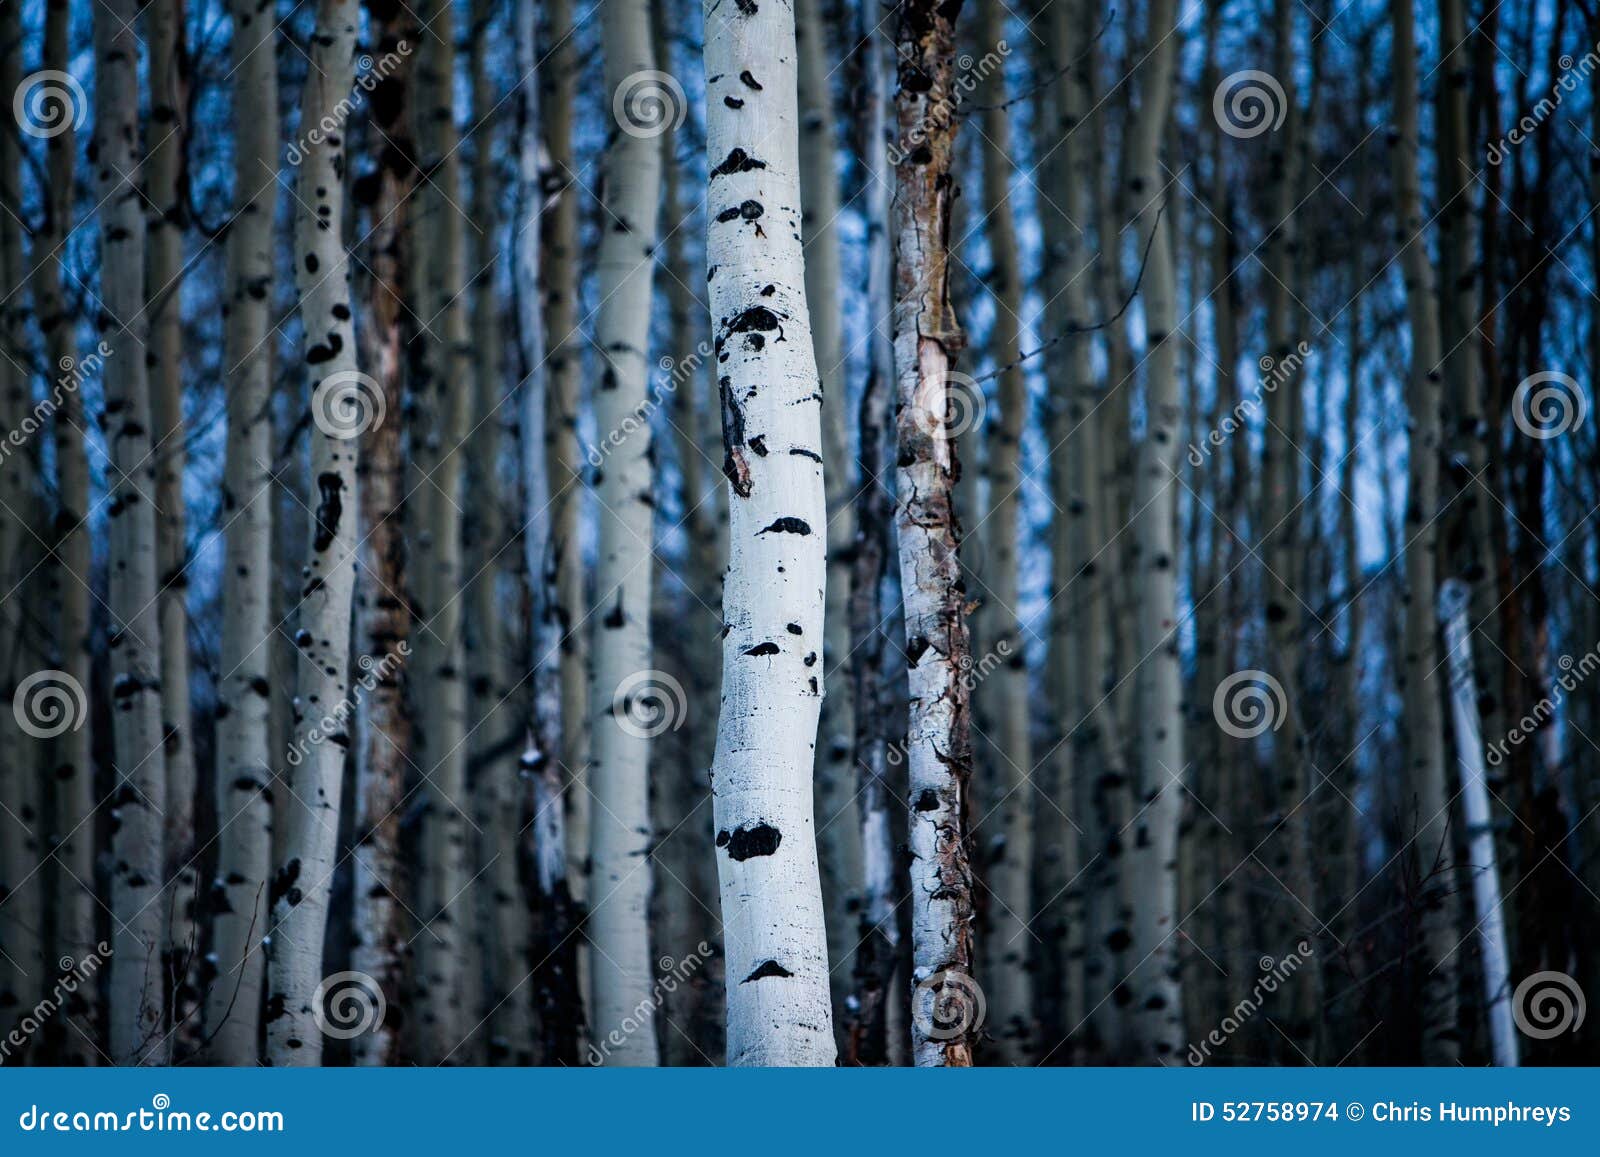 aspen tree bark in winter